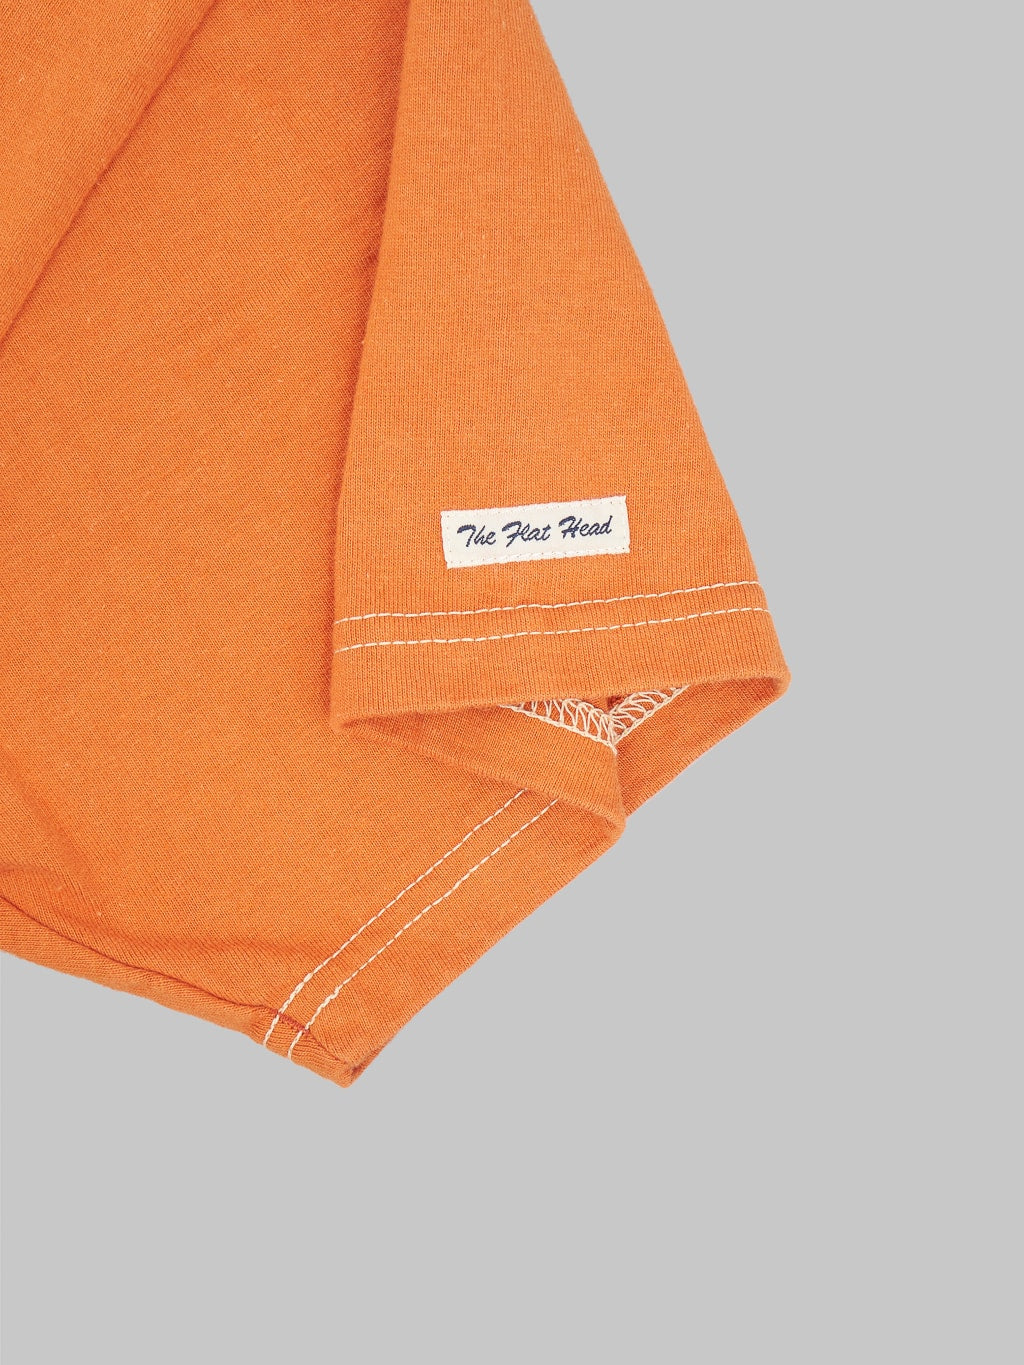 The Flat Head Loopwheeled Heavyweight Plain TShirt Dark Orange brand tag